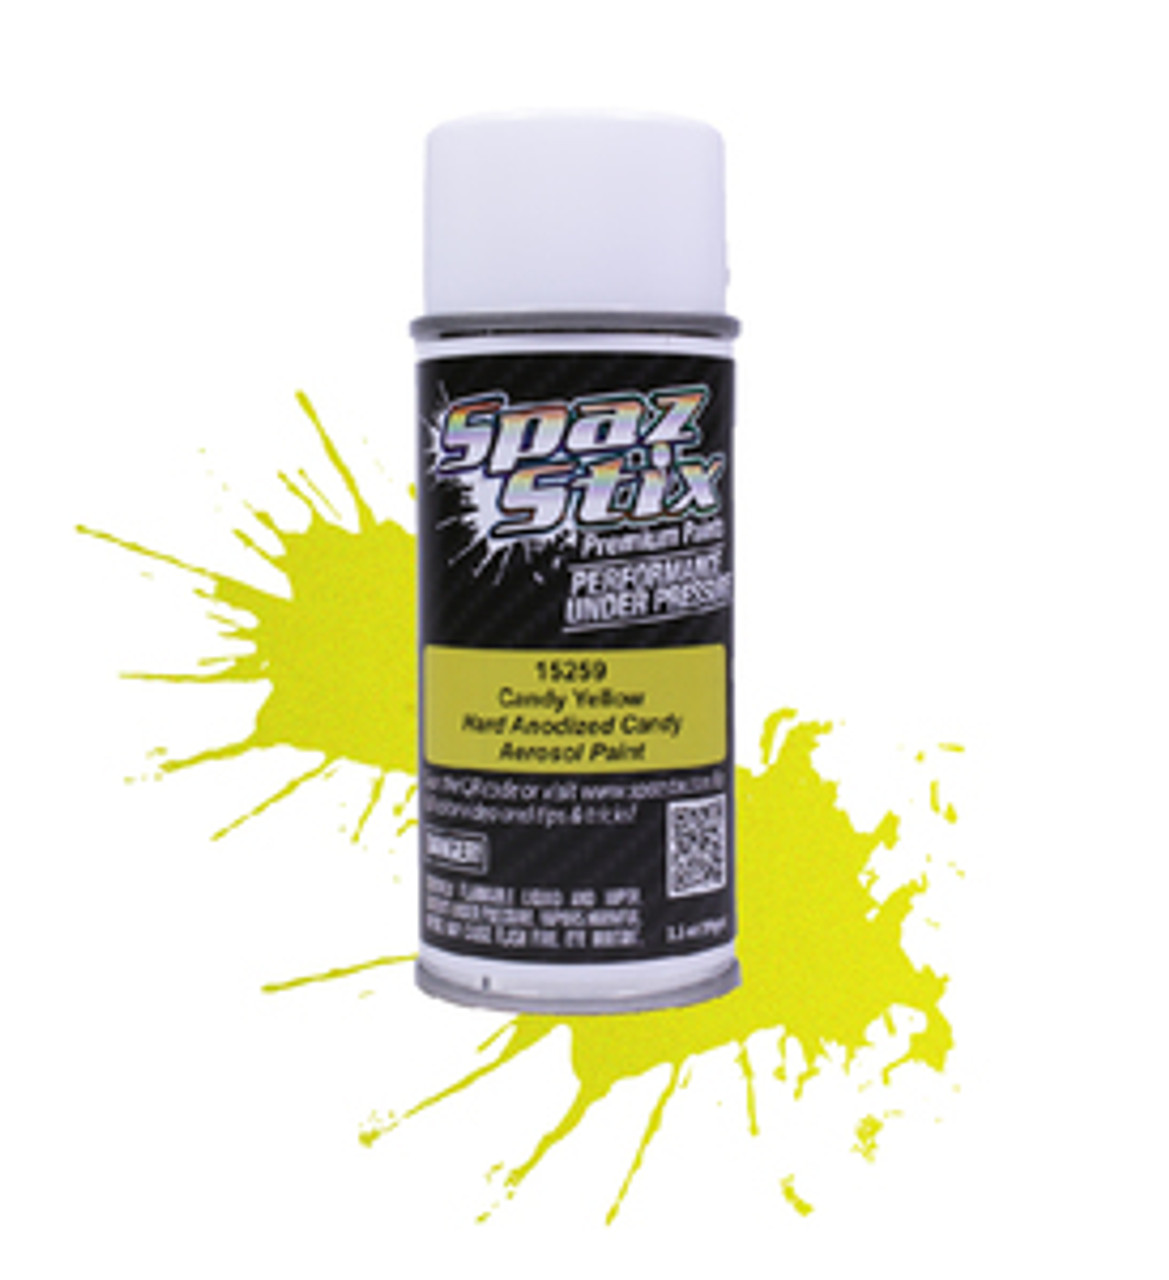 Spaz Stix Candy Yellow Aerosol Paint Spaz Stix SZX15259